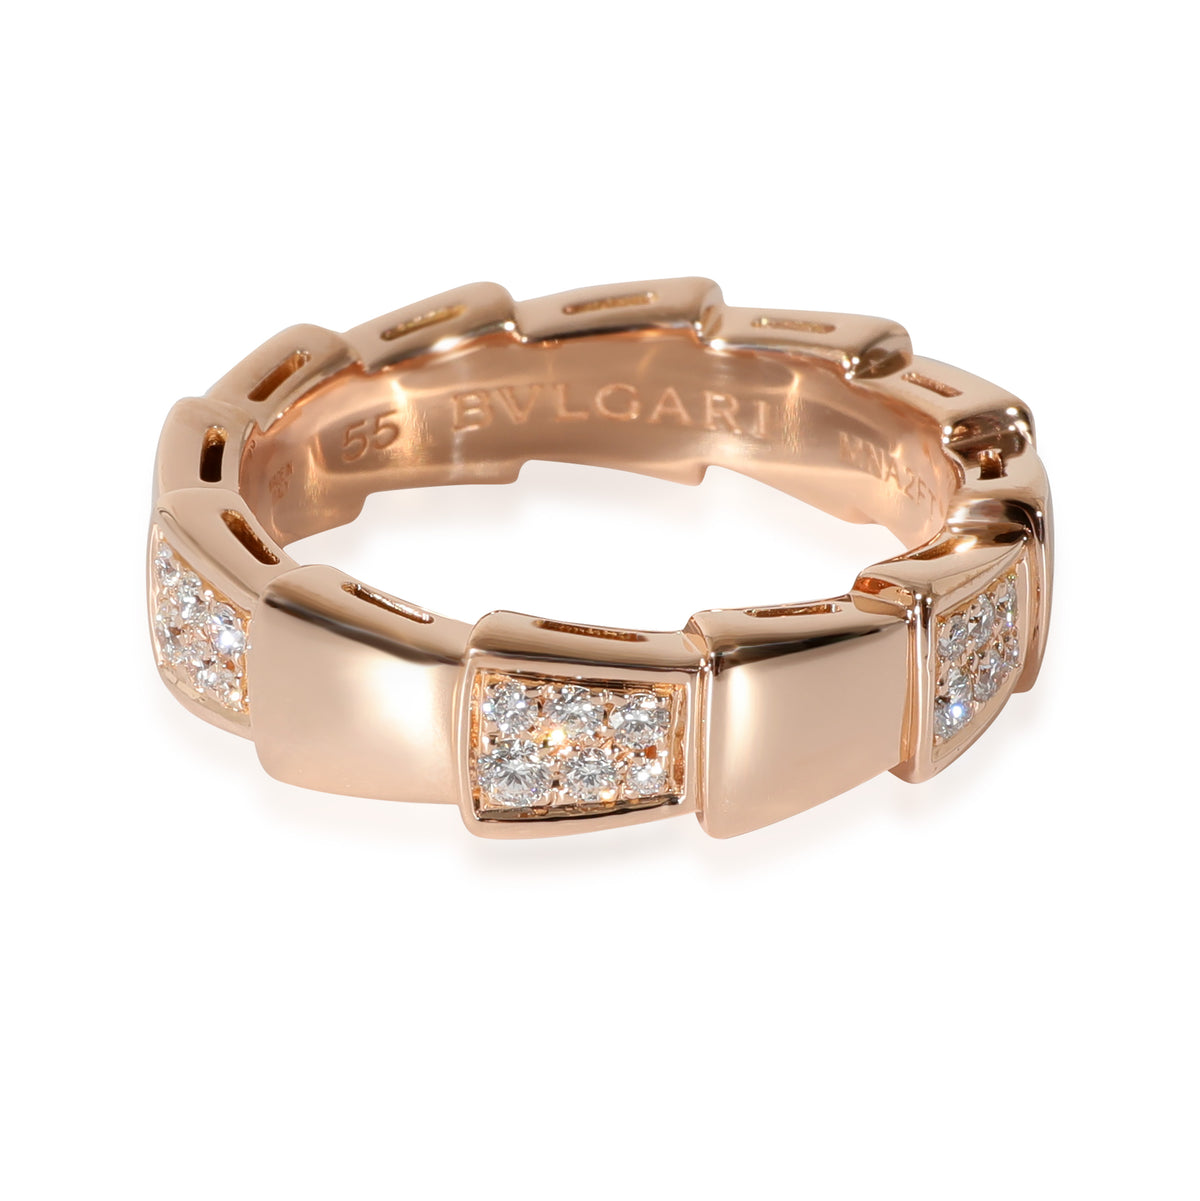 BVLGARI Serpenti Diamond Ring in 18k Rose Gold 0.41 CTW